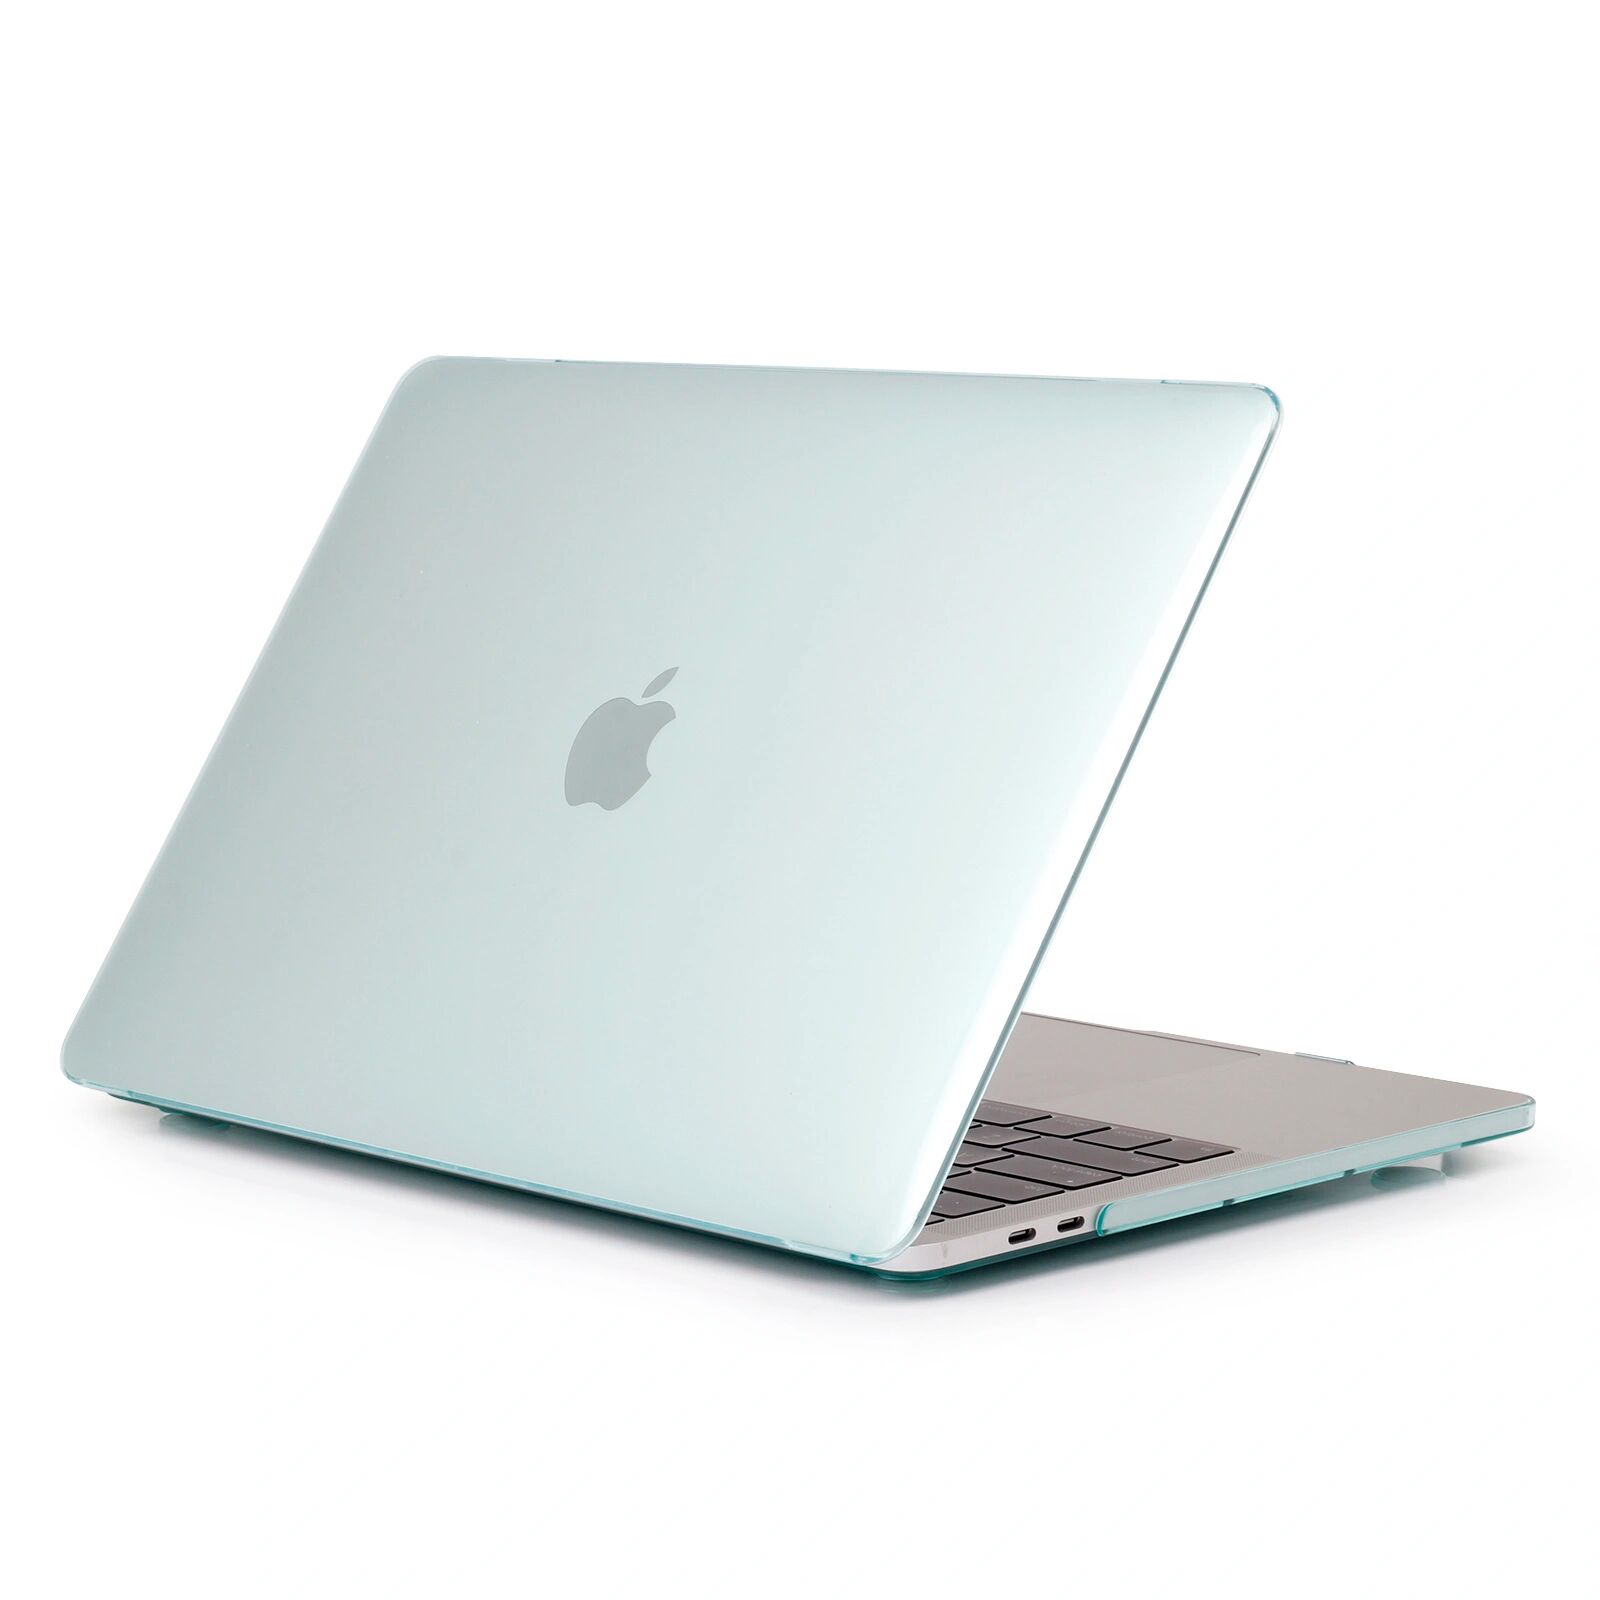 iPouzdro.cz Ochranný kryt na MacBook Pro 15 (2012-2015) - Crystal Green